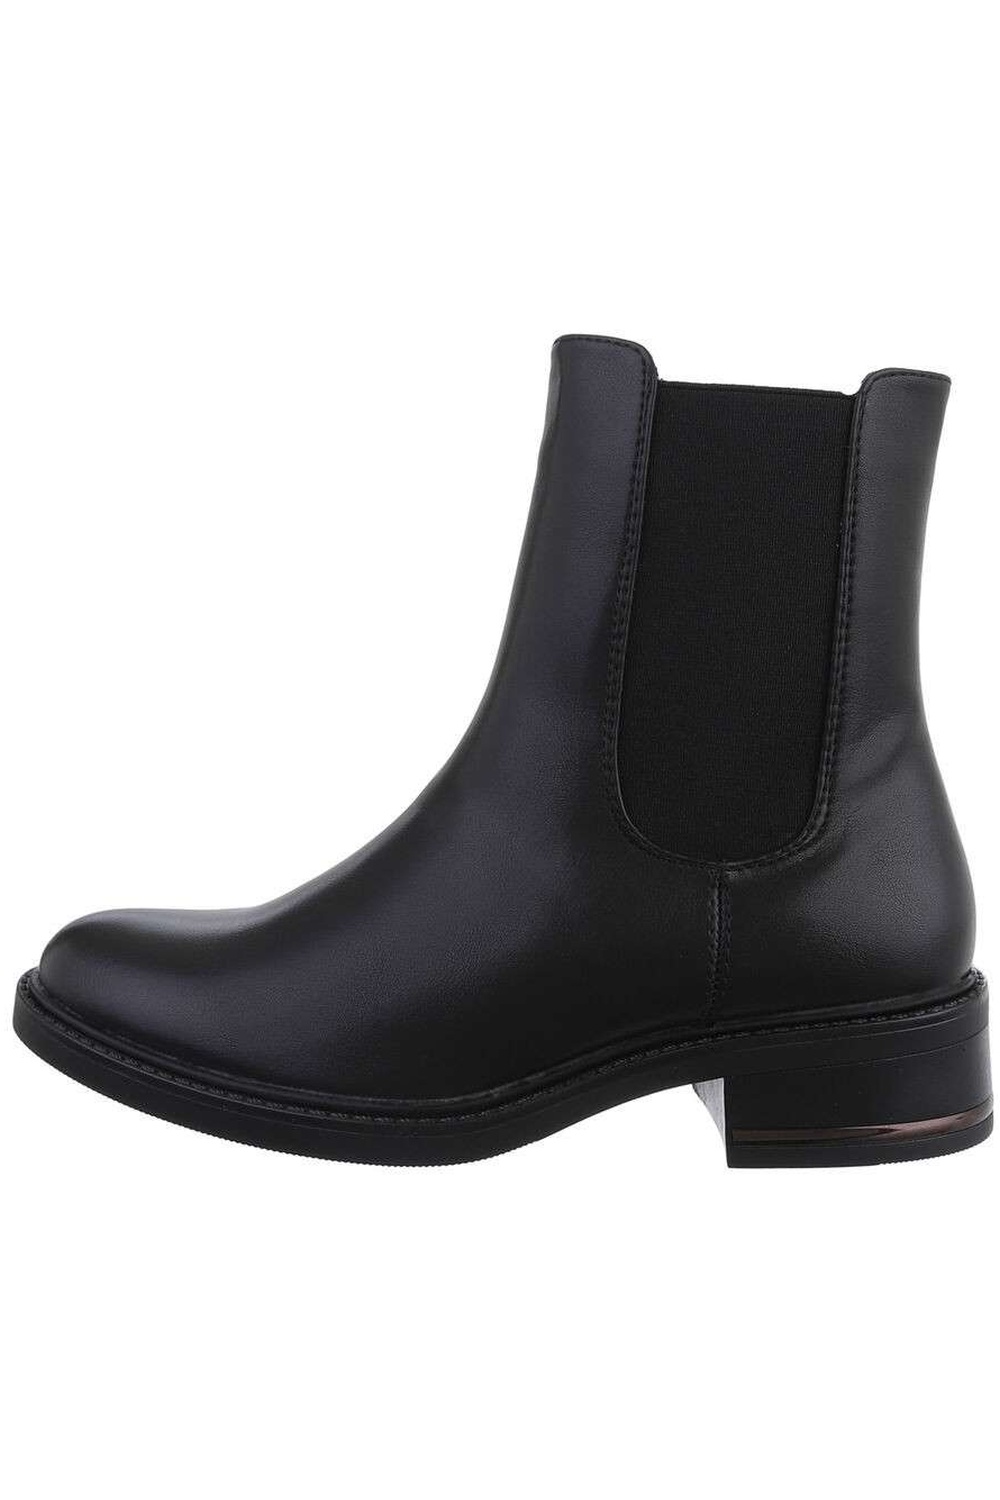 Chelsea Boots 6543-black